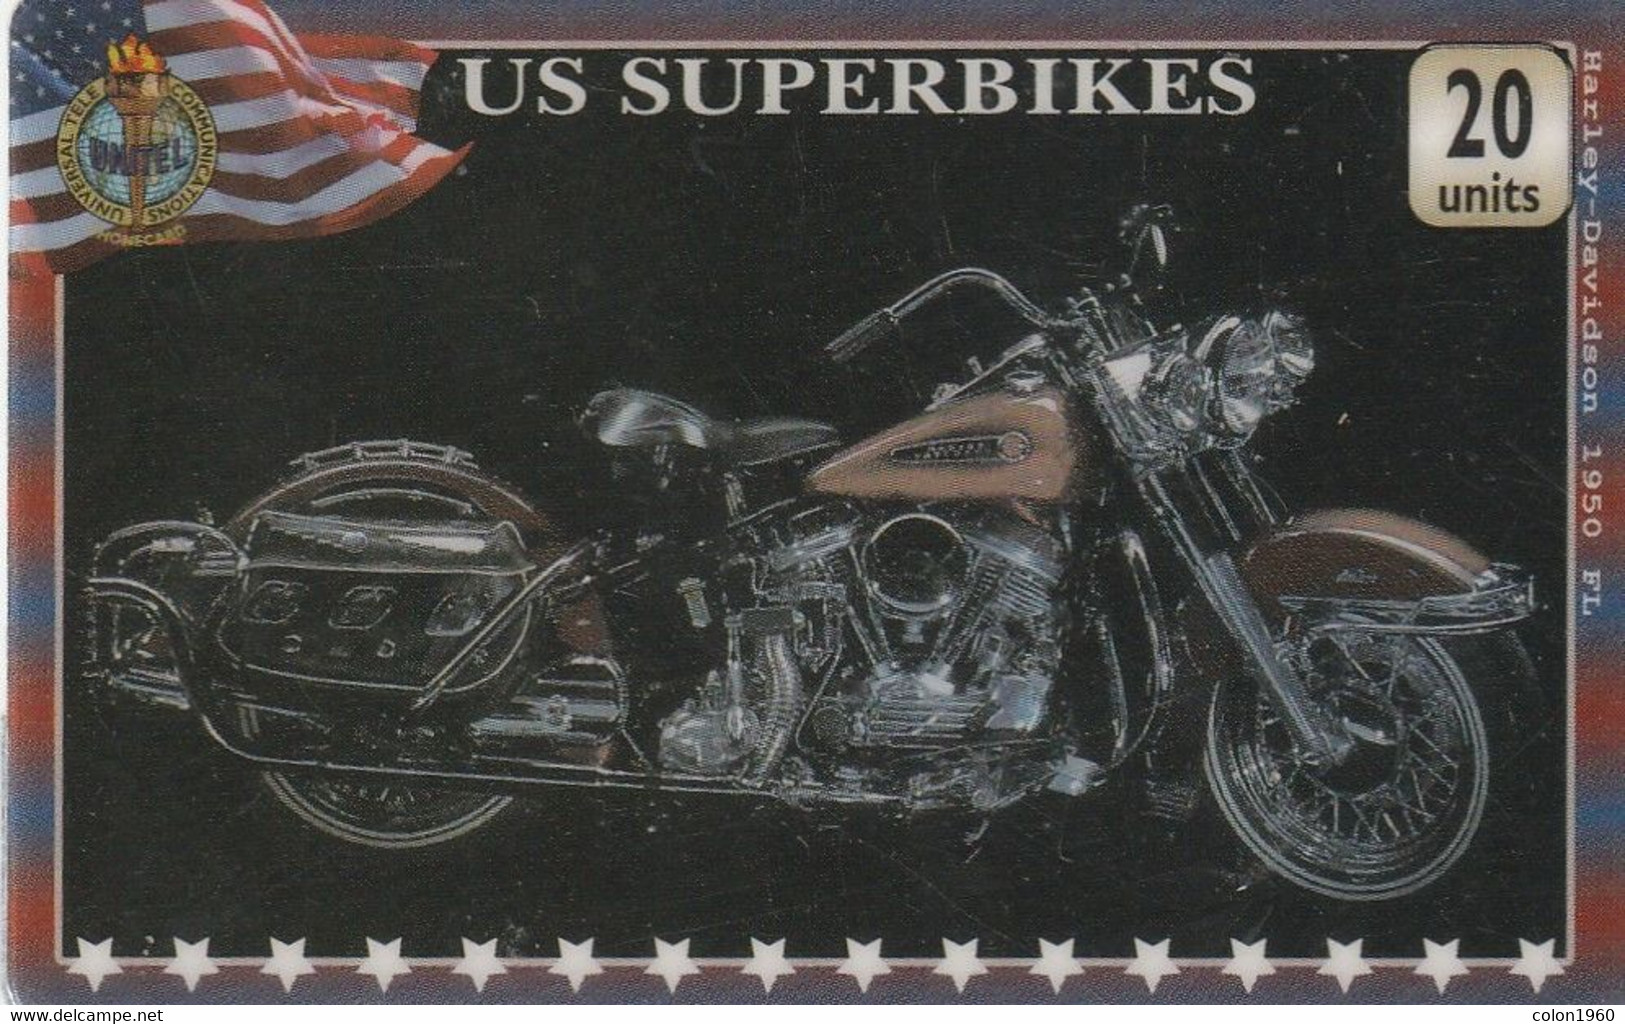 REINO UNIDO. MOTO - MOTORCYCLE. HARLEY DAVIDSON 1950 FL. US SUPERBIKES. UNI-Bike-0236. (798) - Motos